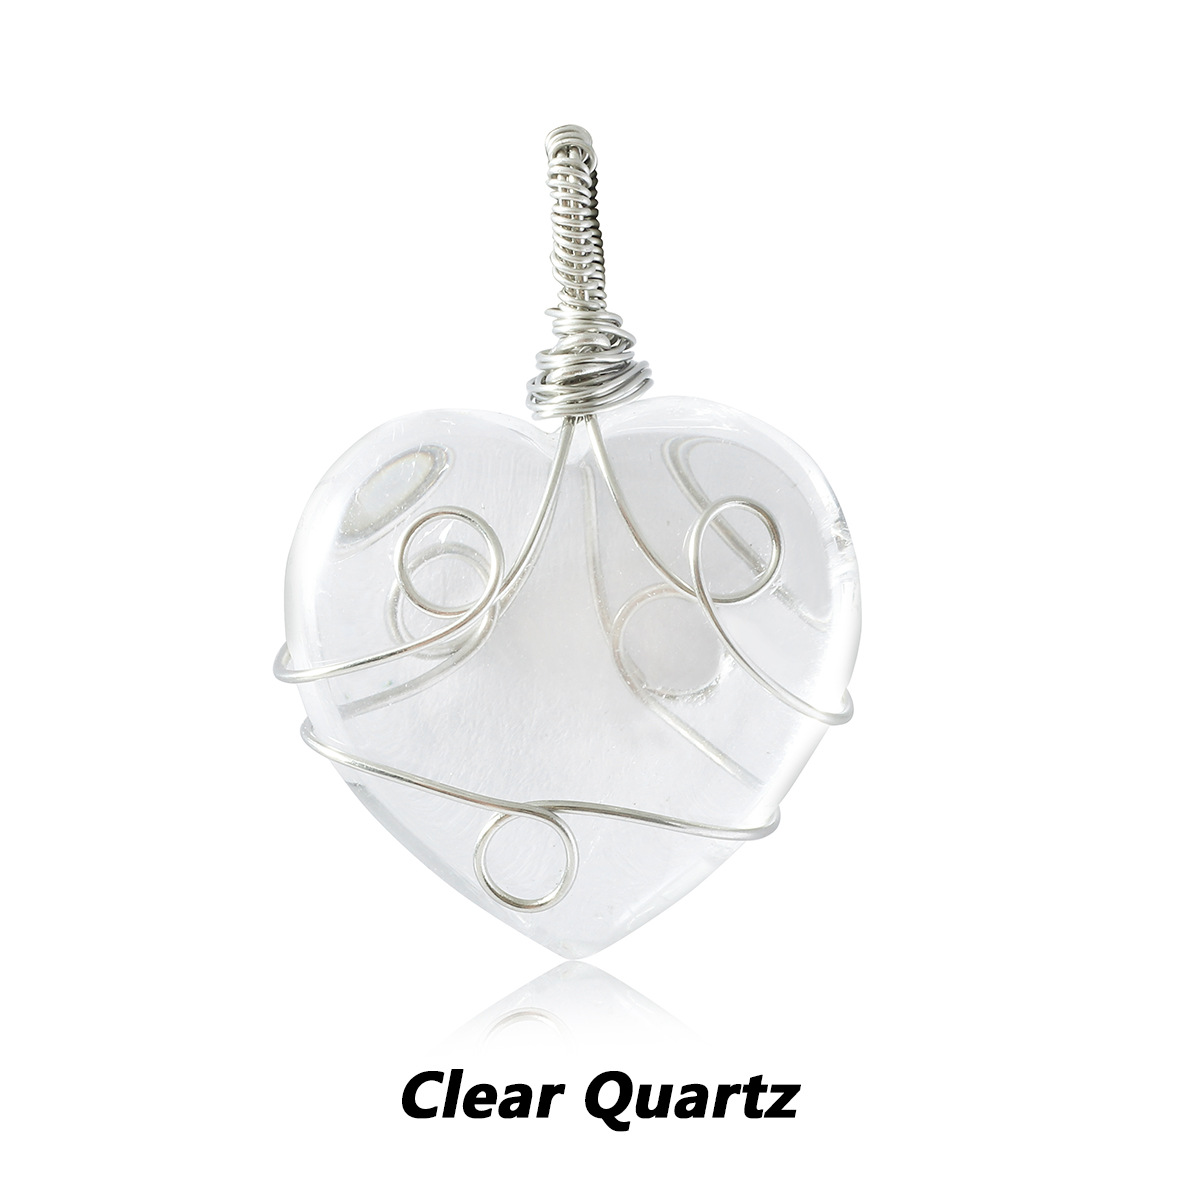 Clear Quartz